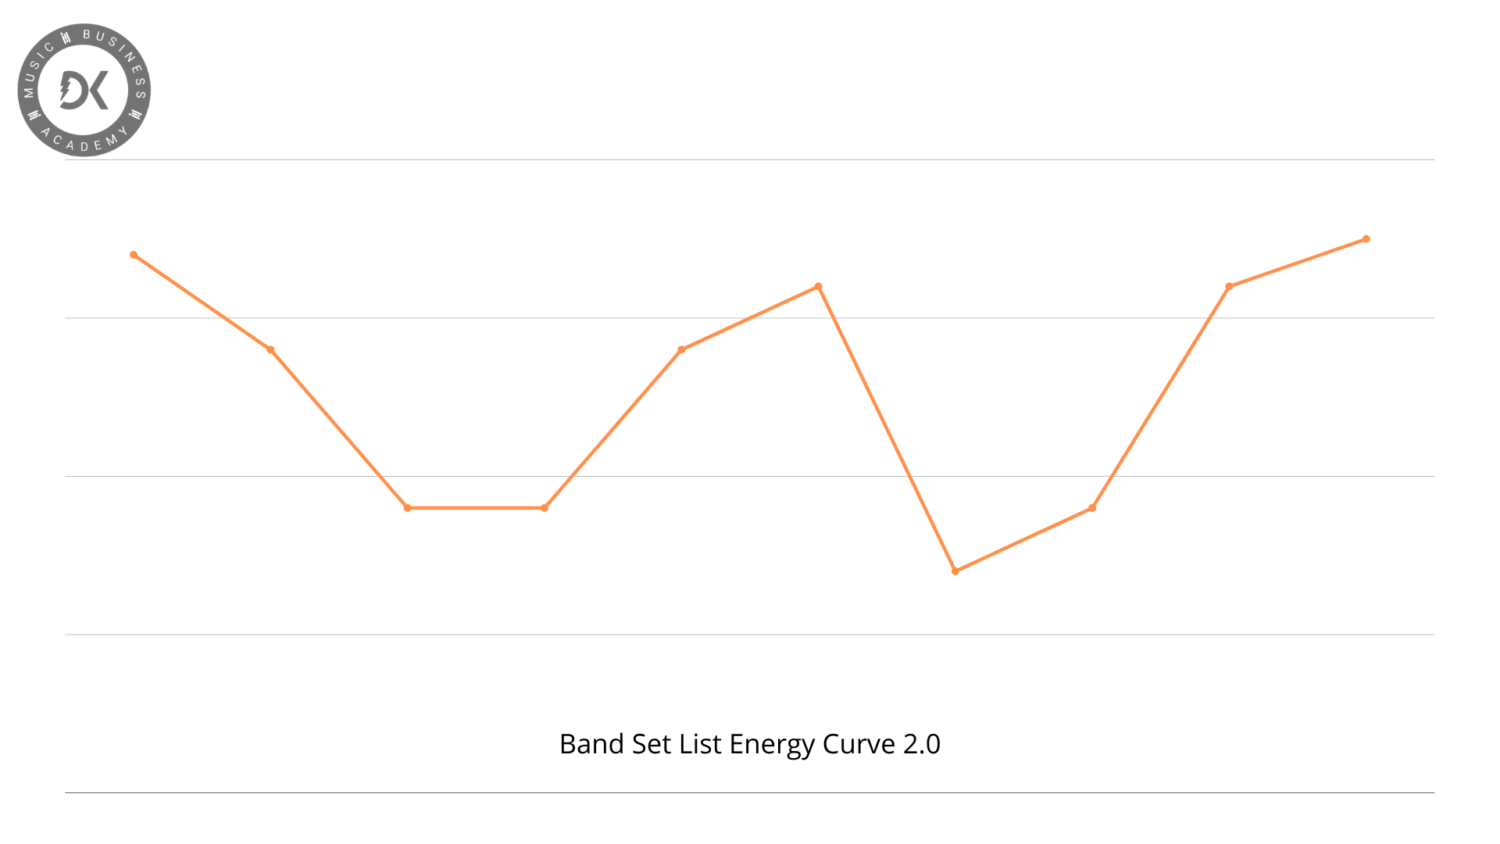 Band performance energy curve 2